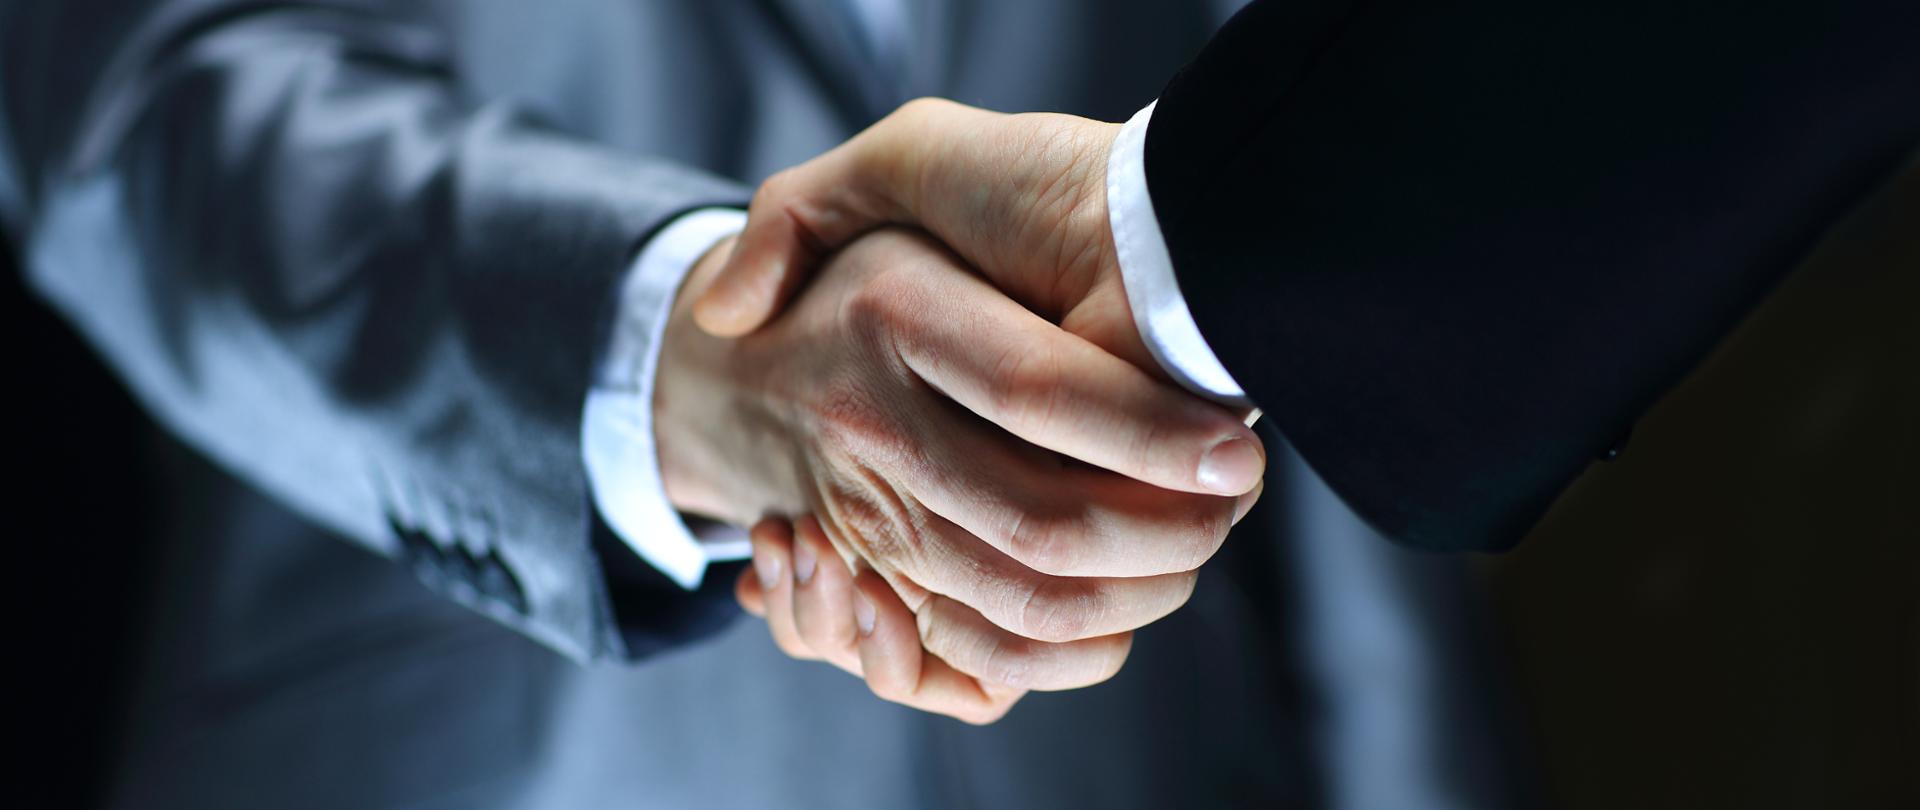 Handshake - Hand holding on black background